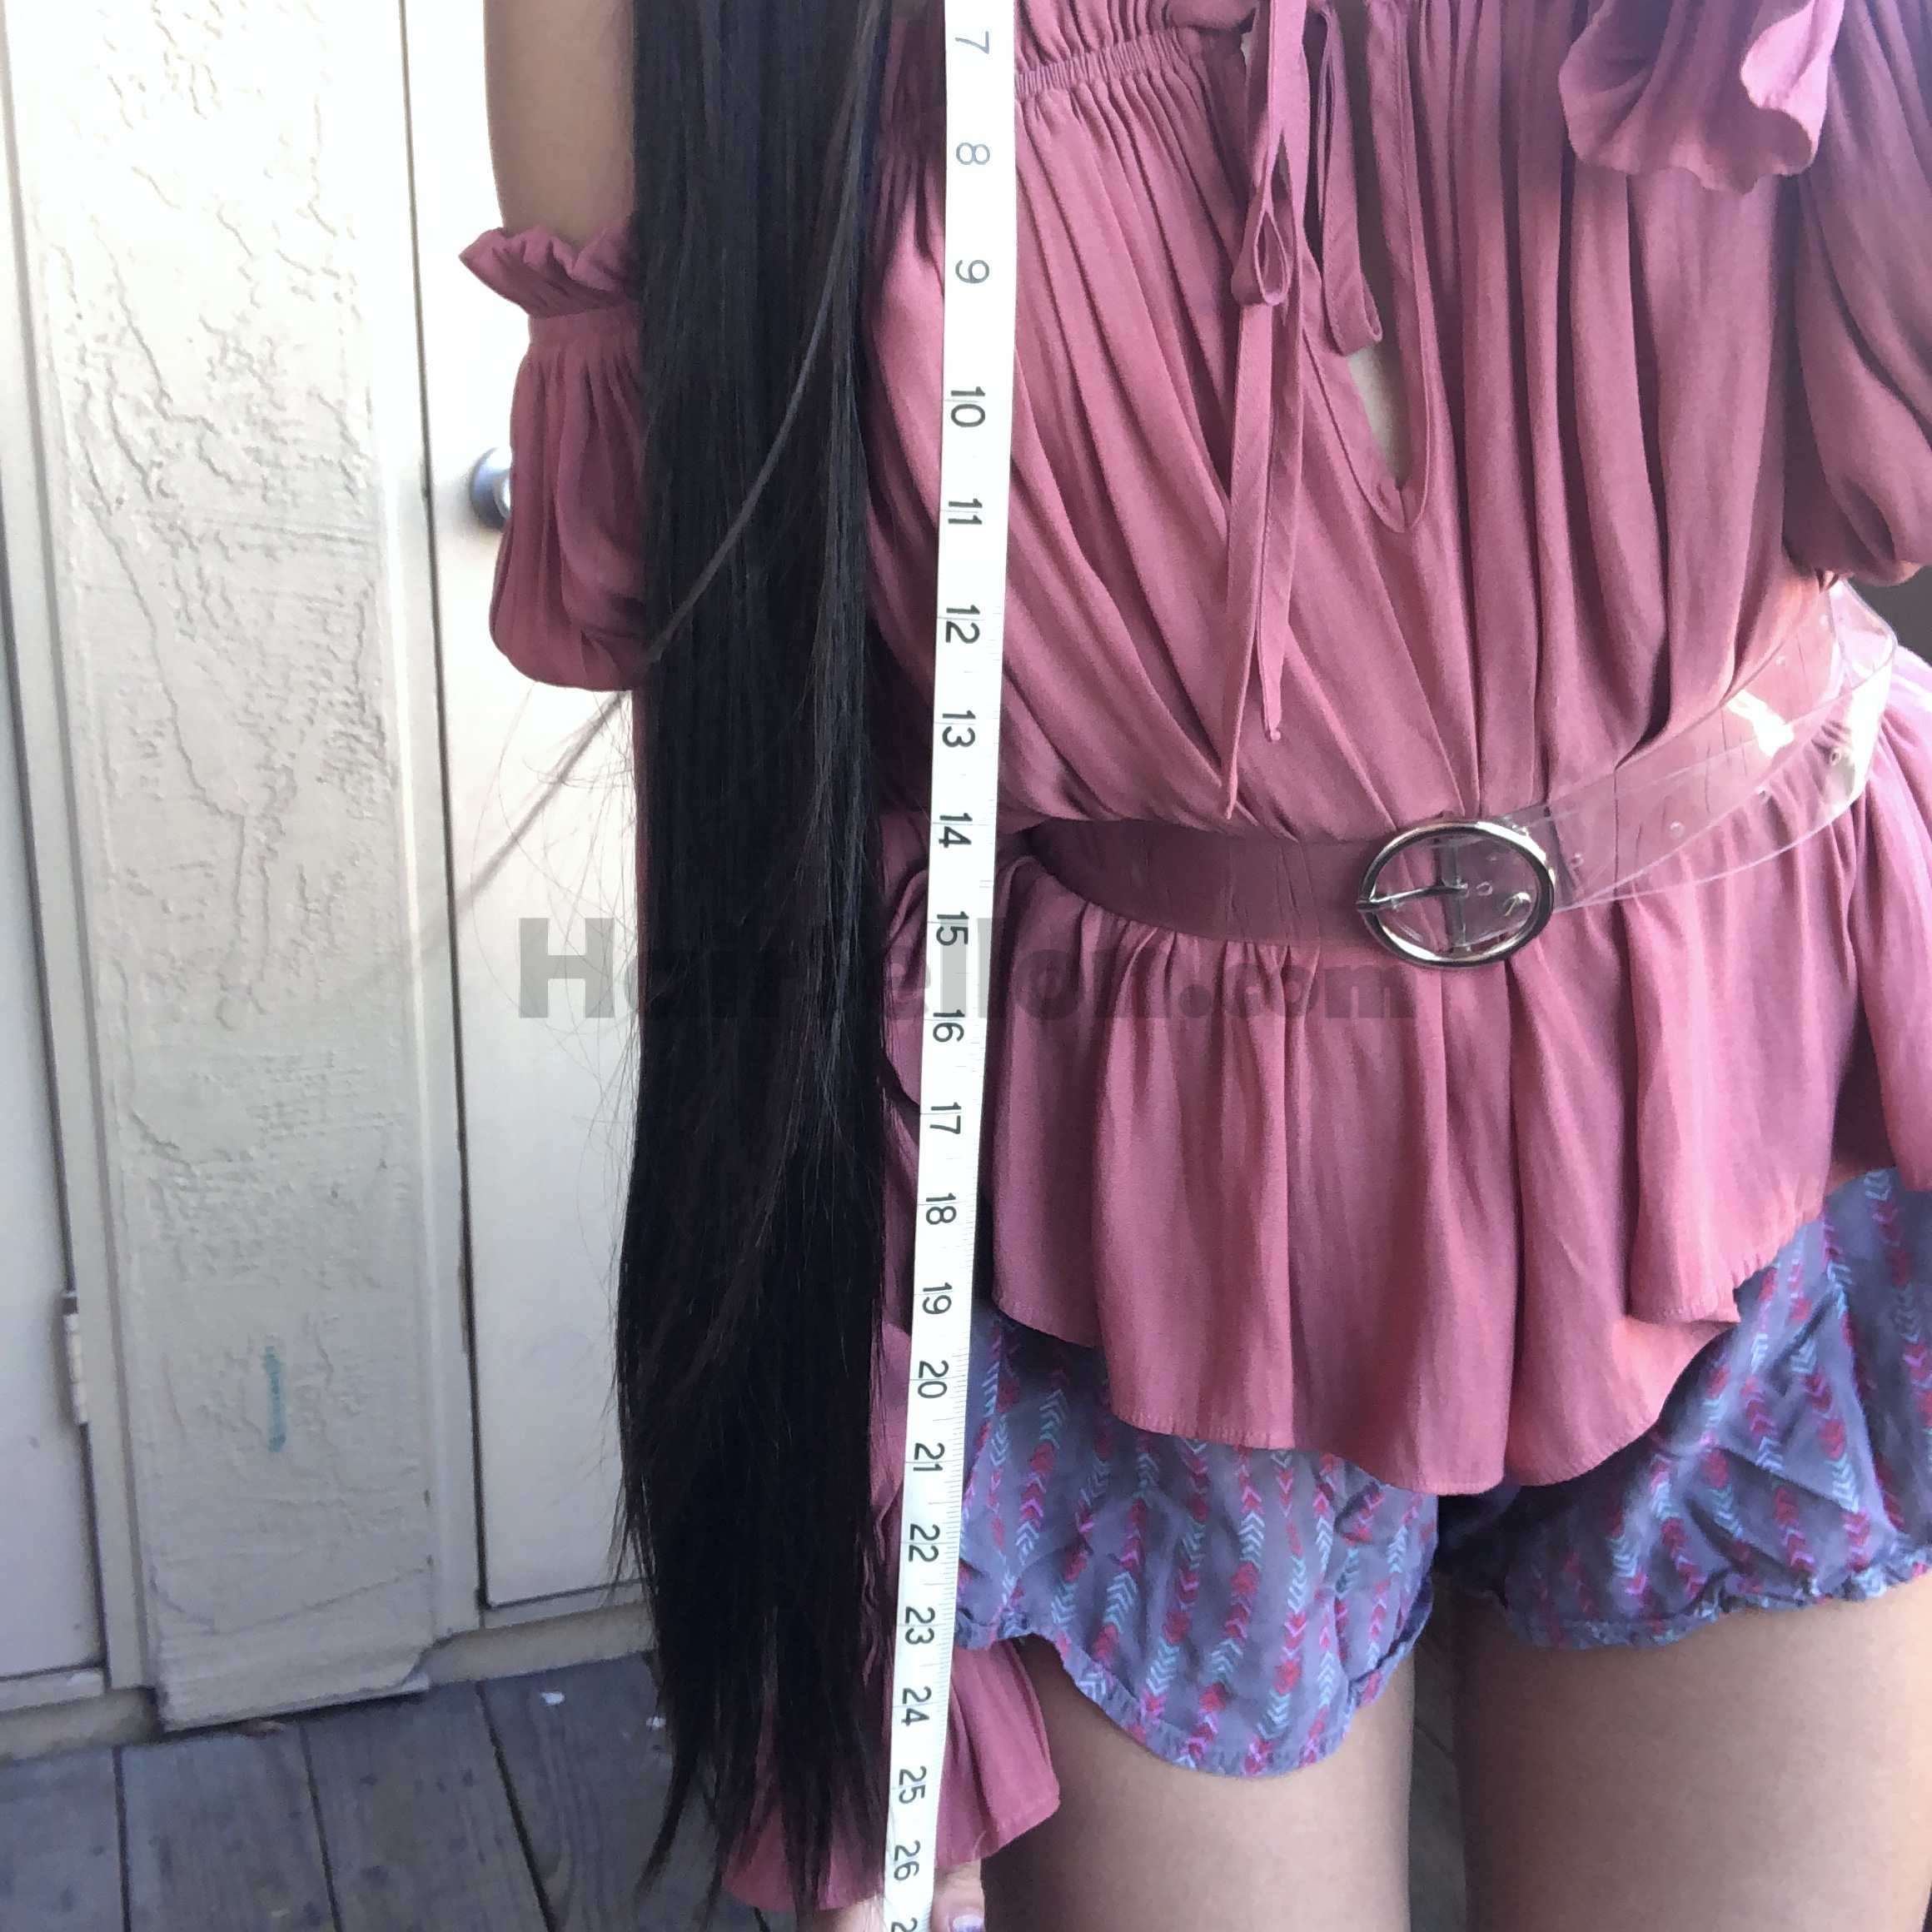 hair length